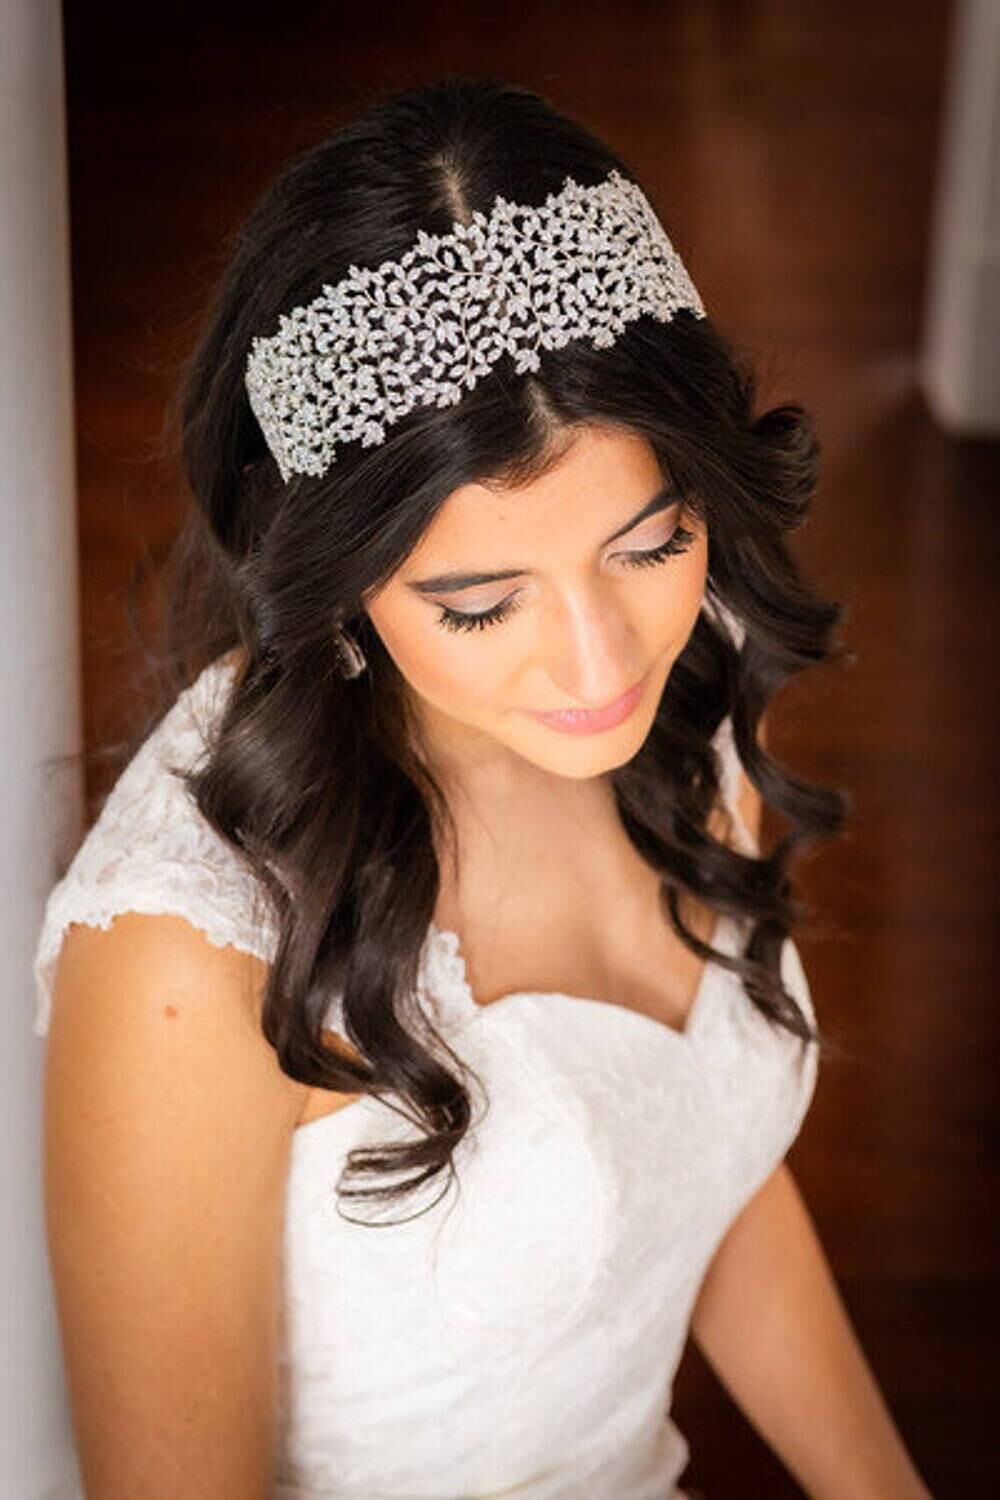 Adriana - Swarovski Crystal wedding headband